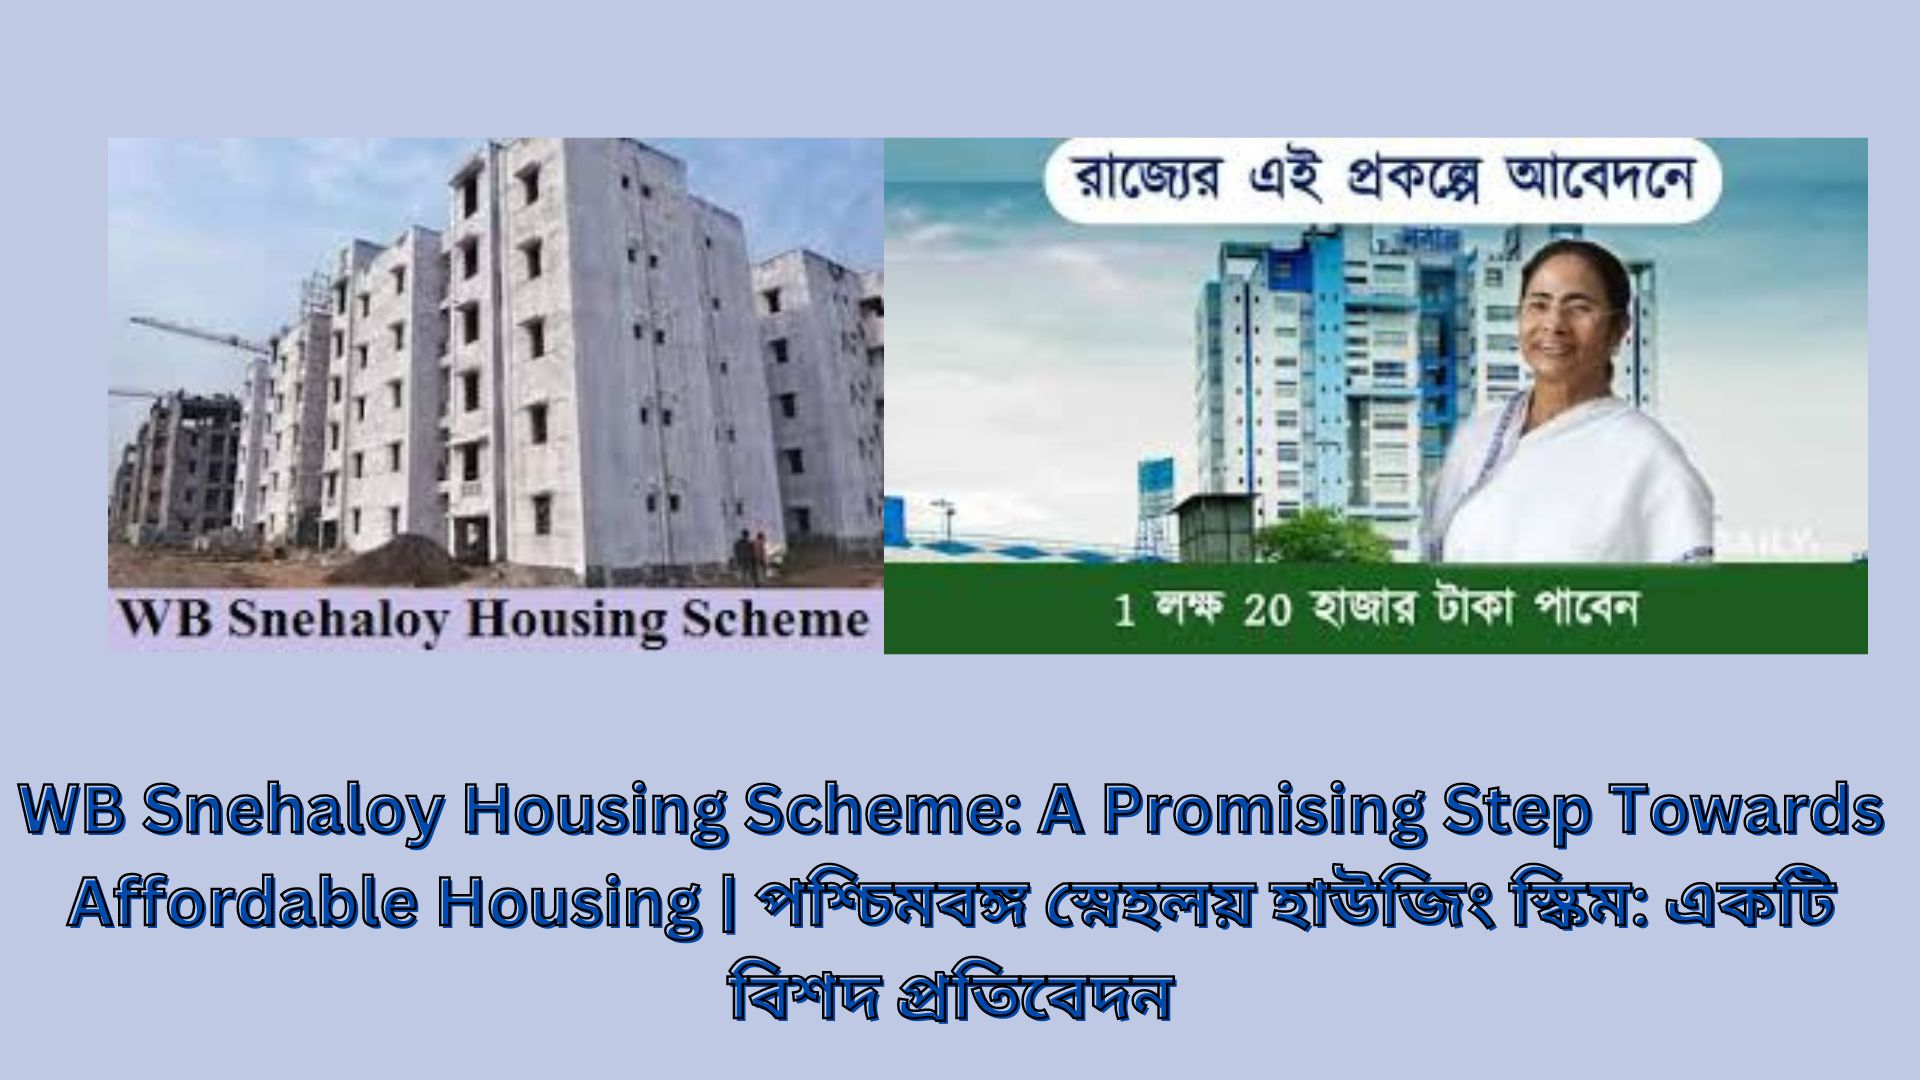 WB Snehaloy Housing Scheme: A Promising Step Towards Affordable Housing | পশ্চিমবঙ্গ স্নেহলয় হাউজিং স্কিম: একটি বিশদ প্রতিবেদন